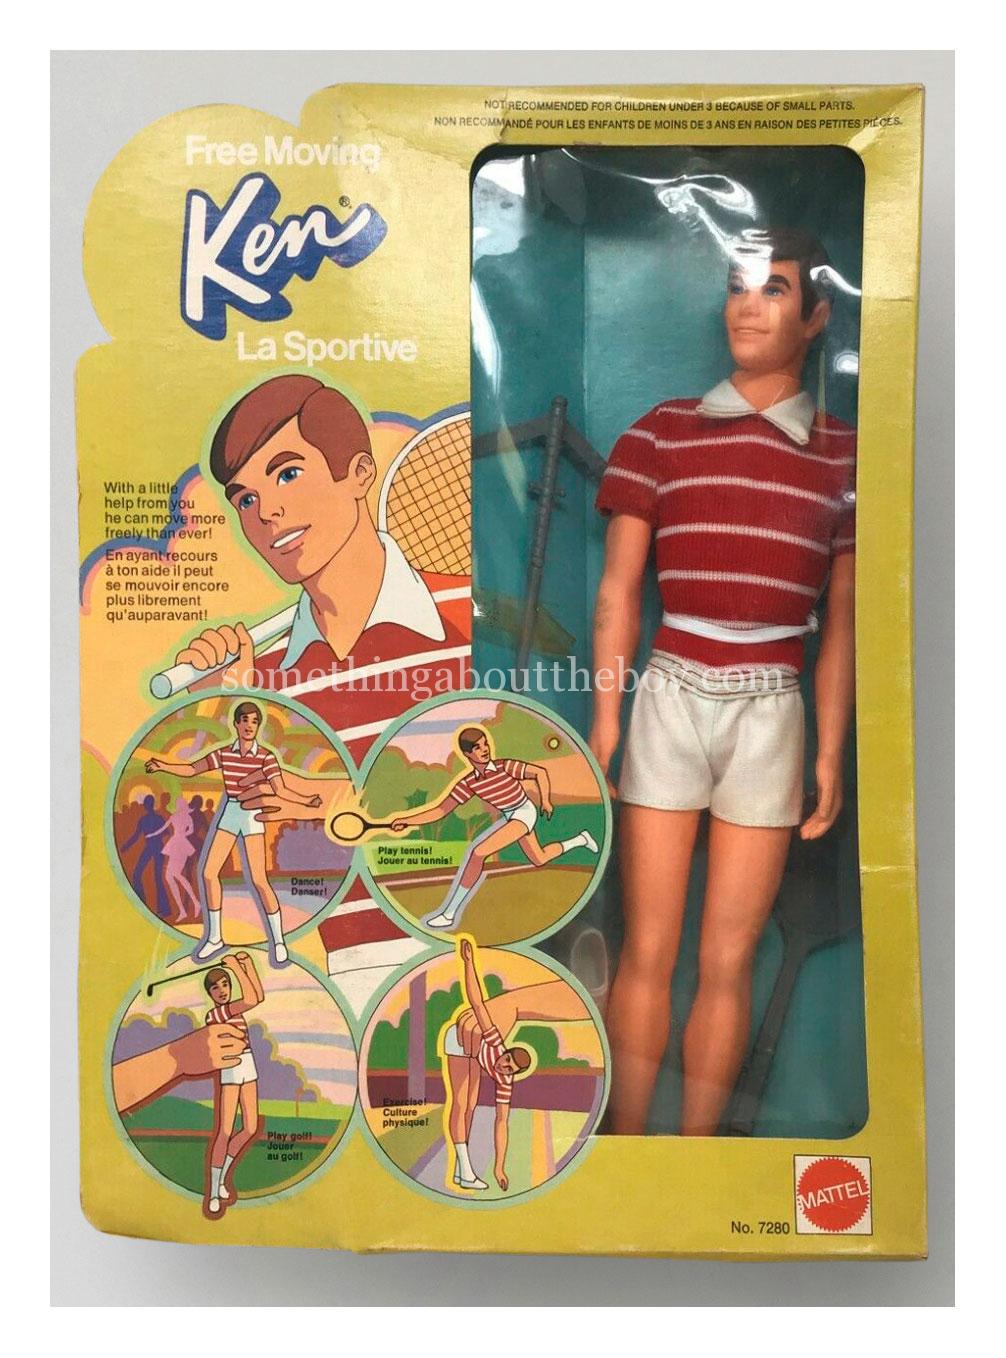 1975 #7280 Free Moving Ken in Canadian packaging